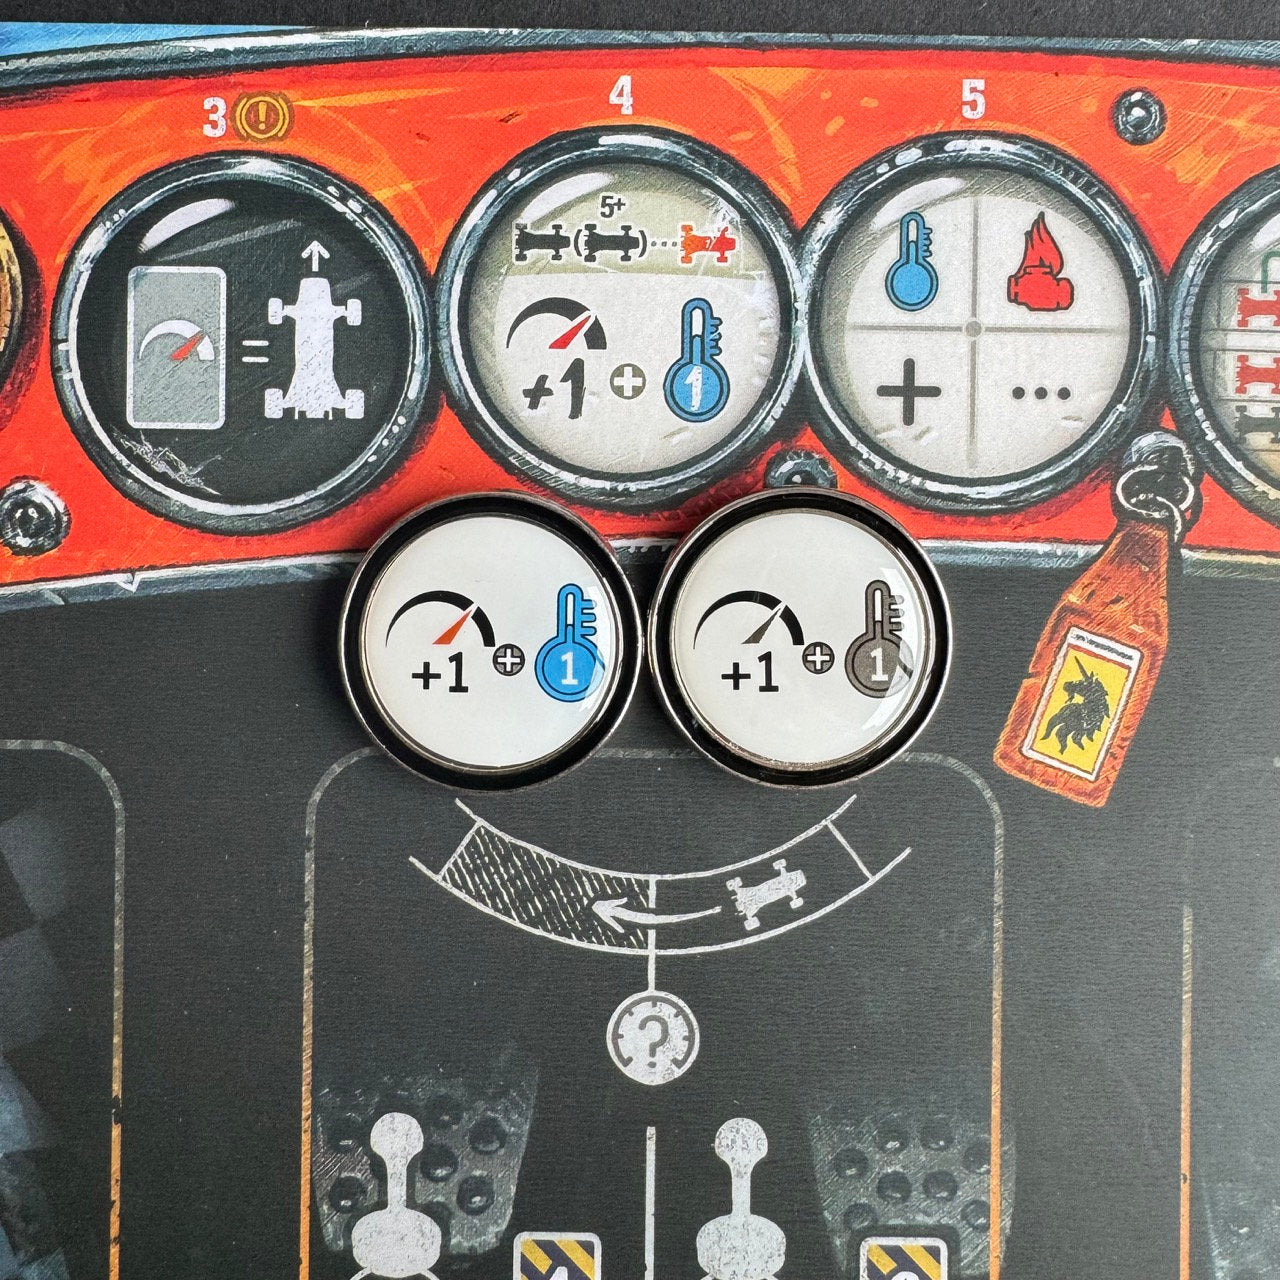 2x Heat Board Game Tokens, Adrenaline Upgrade Metal Token, Double Sided